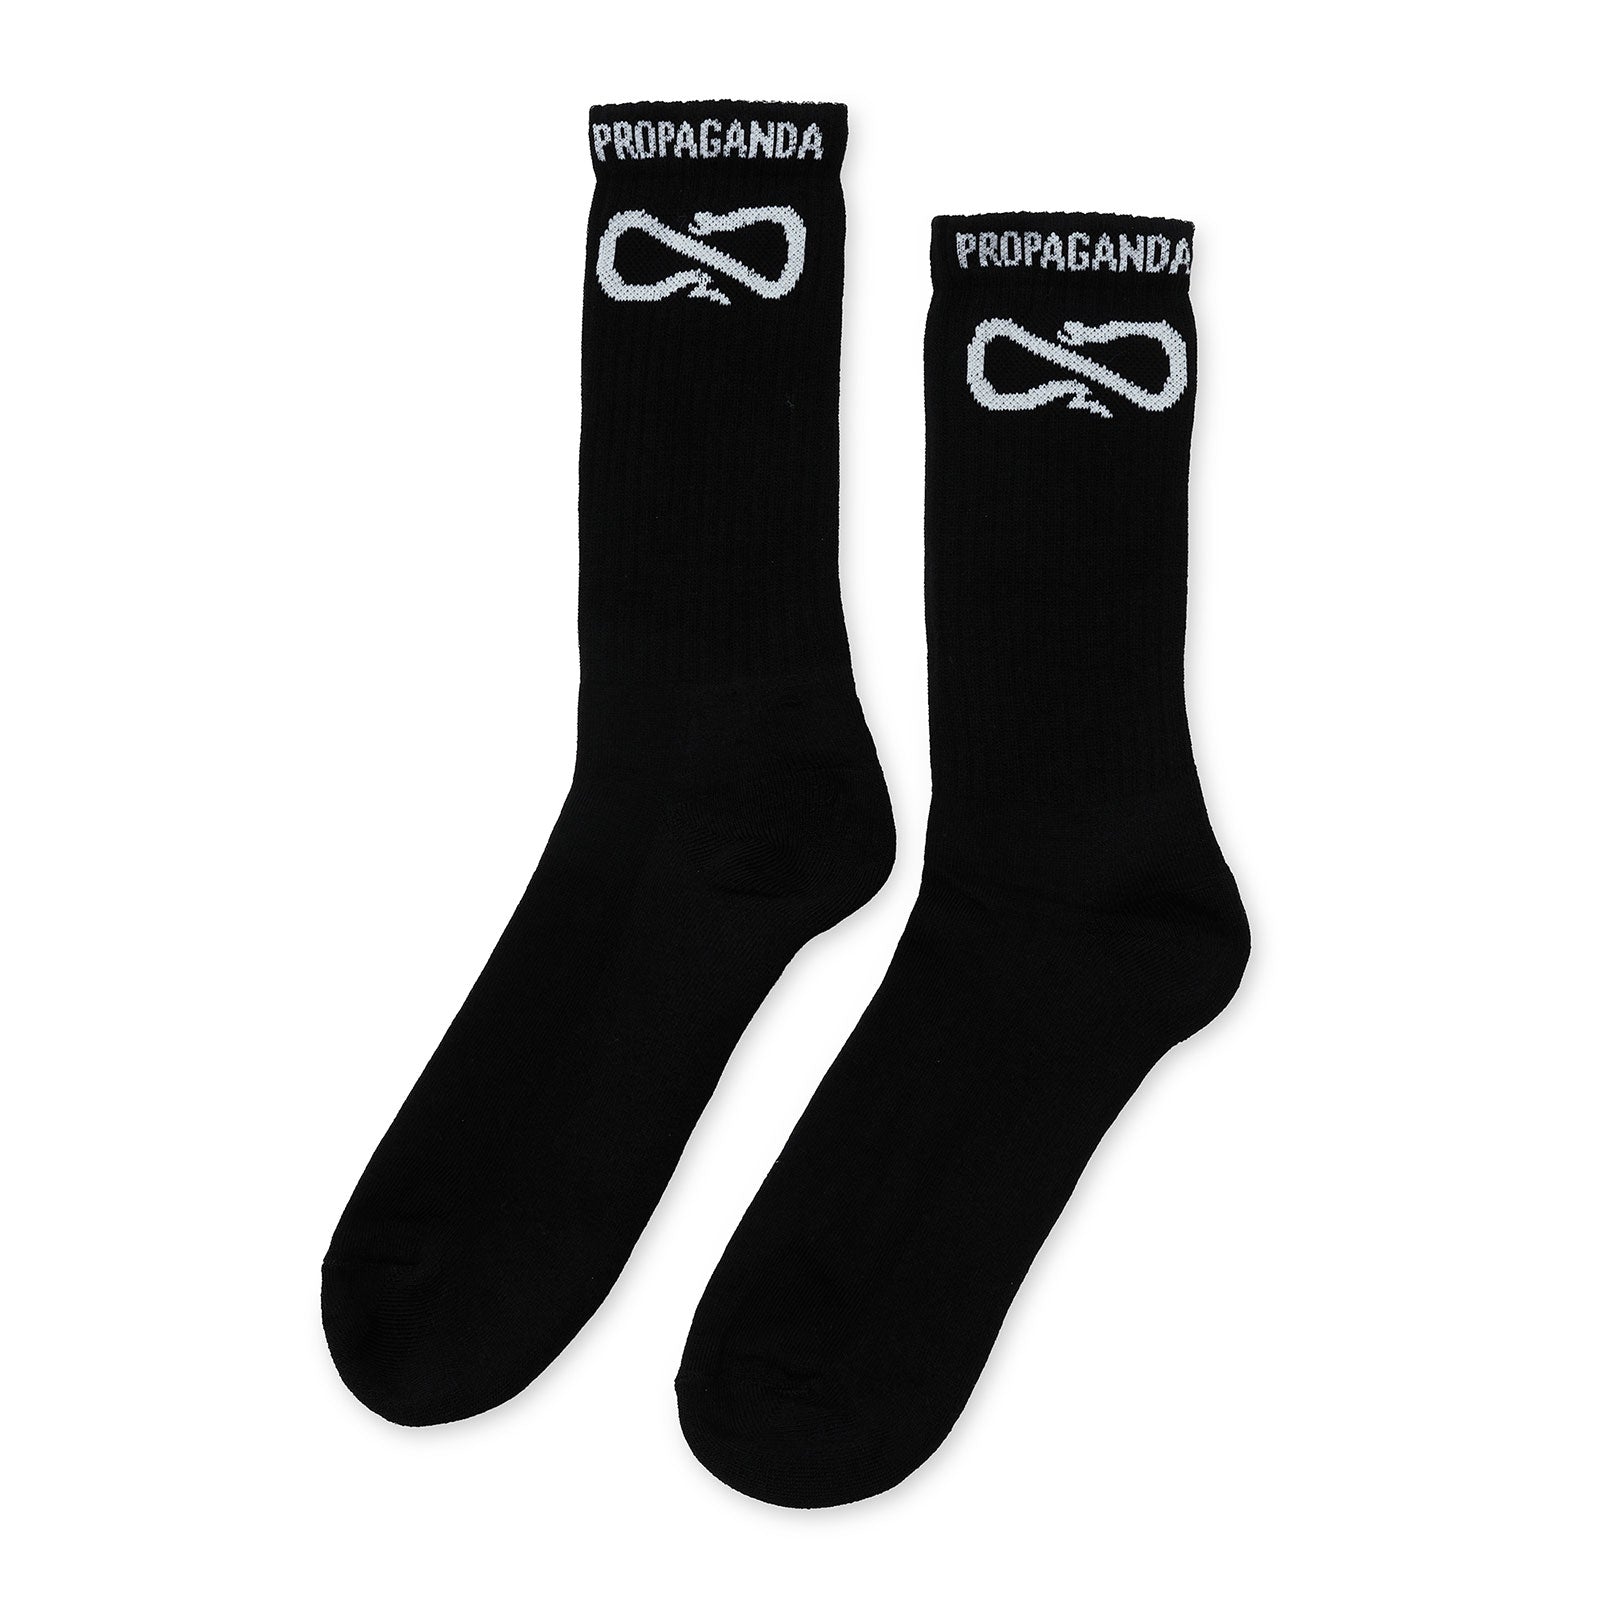 Propaganda socks Logo Socks One size 23SSPRAC237 black